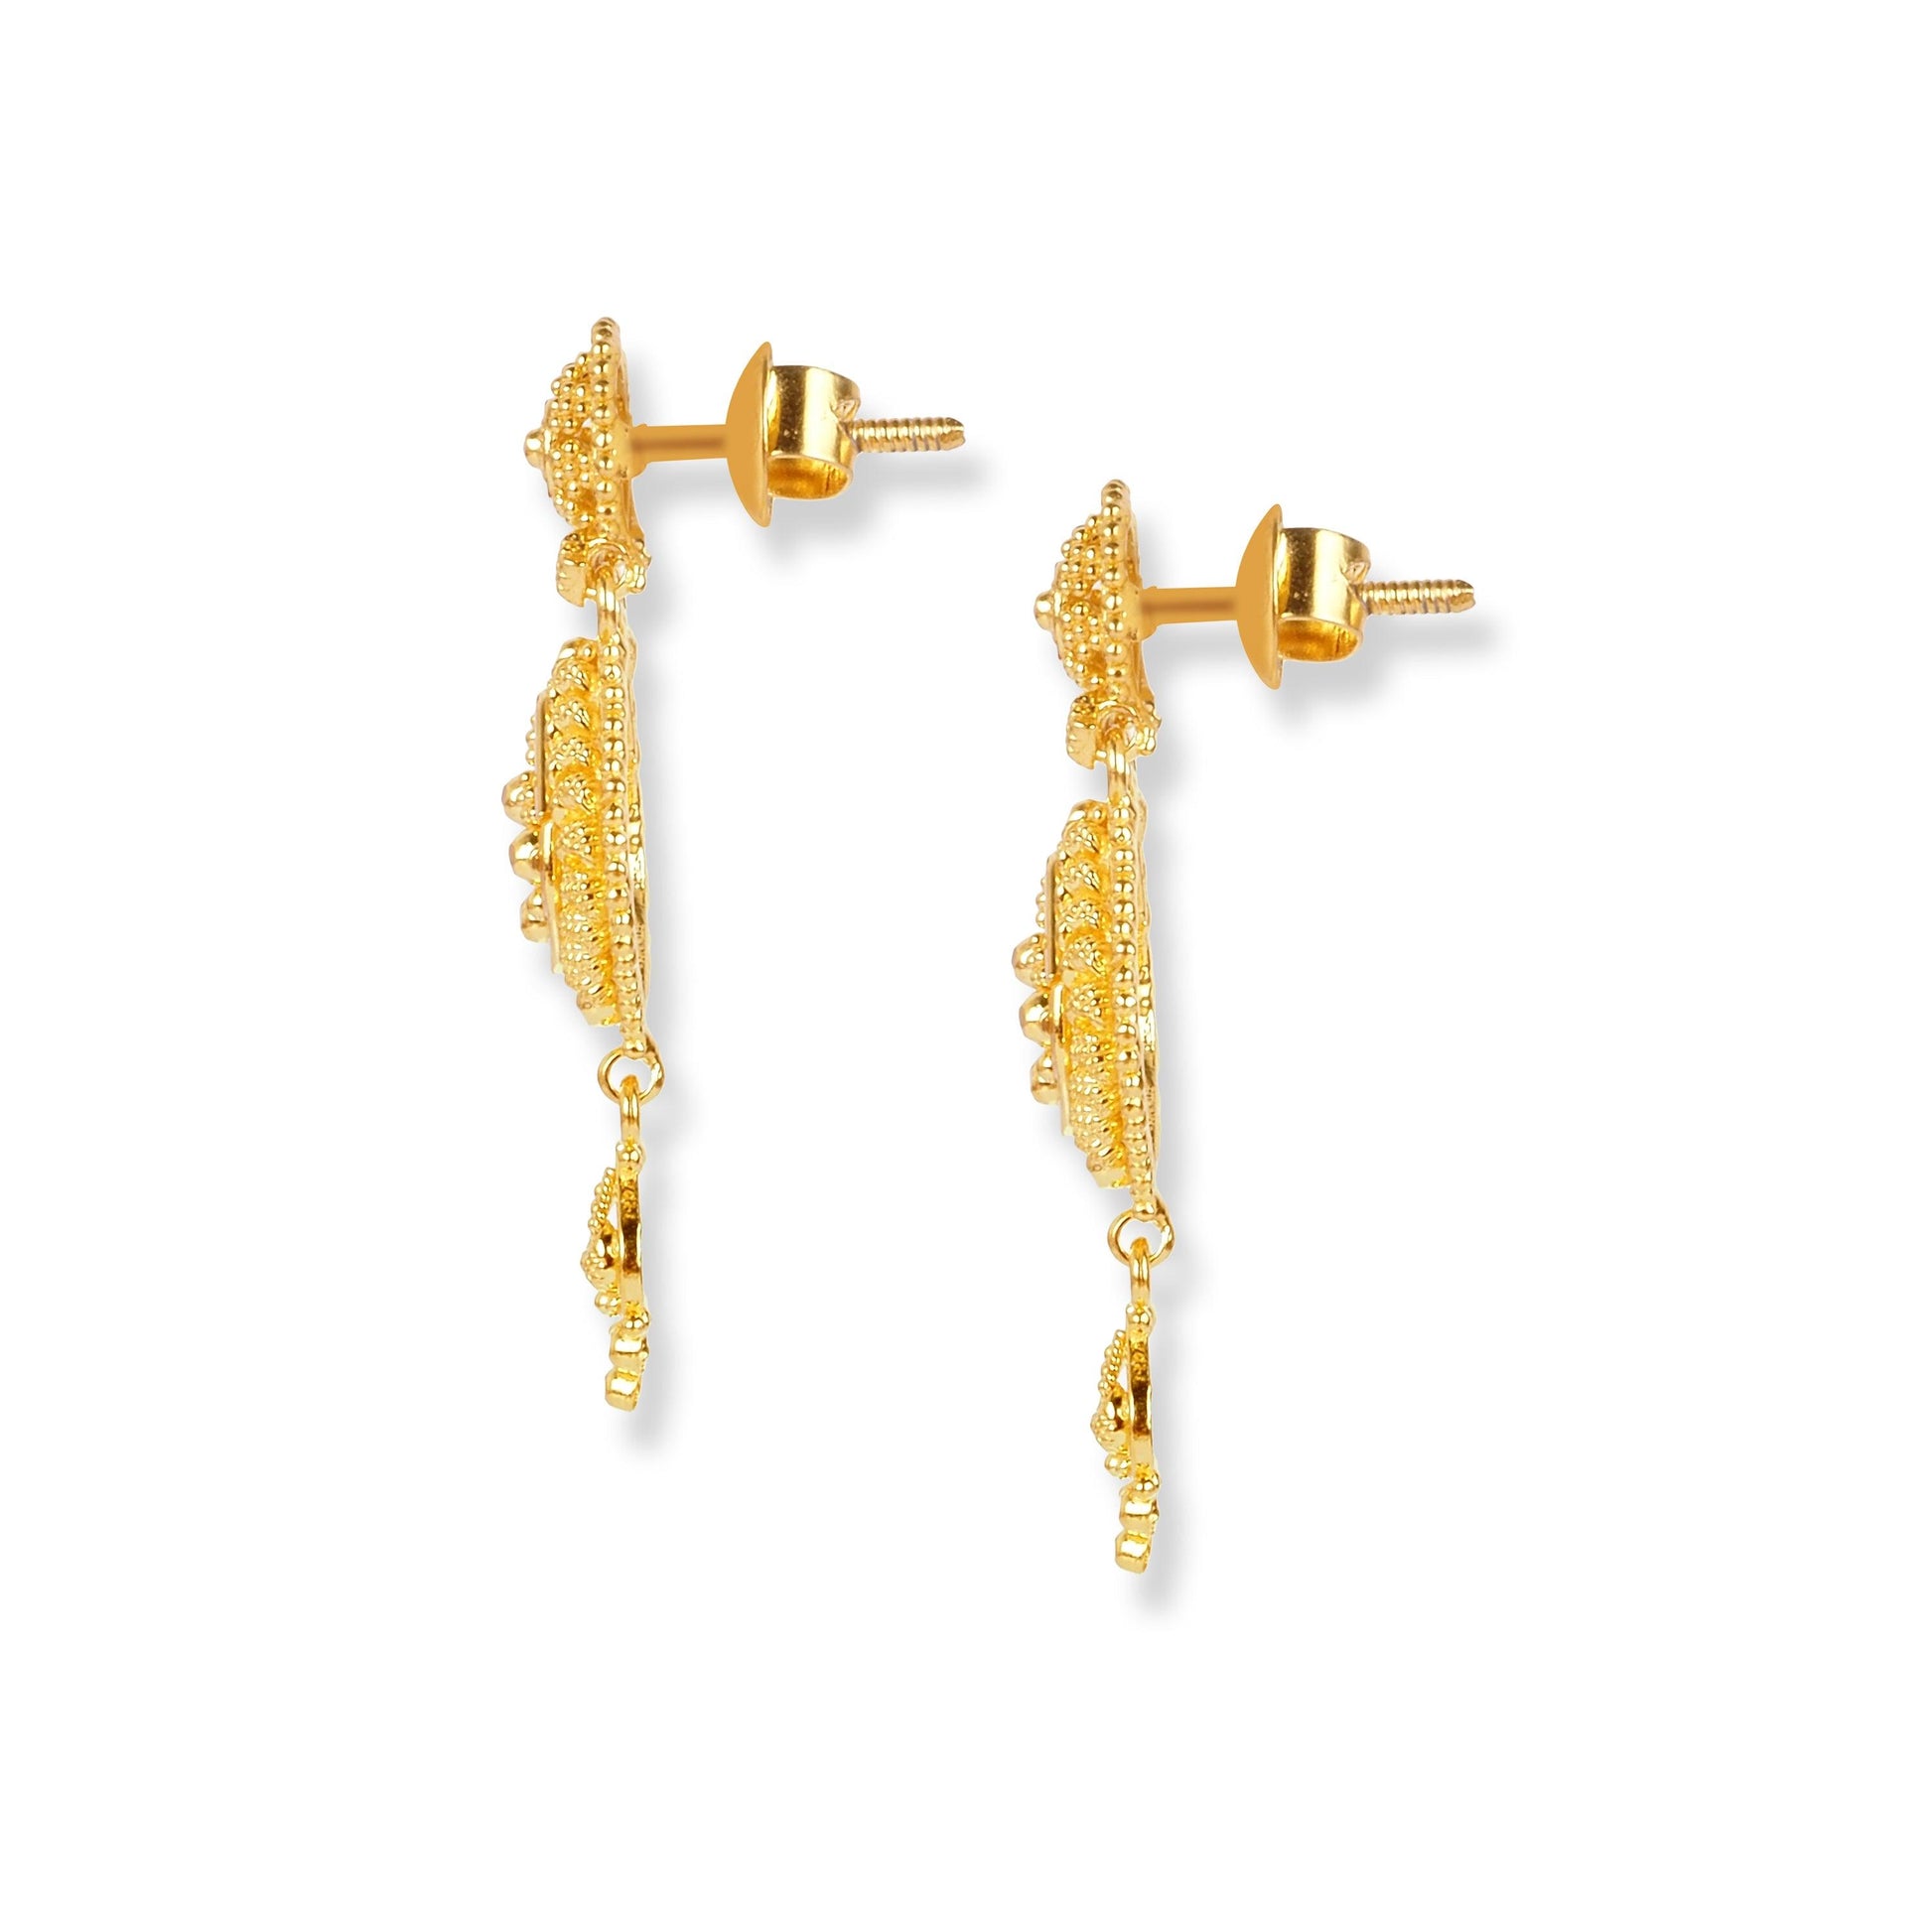 22ct Gold Set with Filigree Work N-7910 - Minar Jewellers